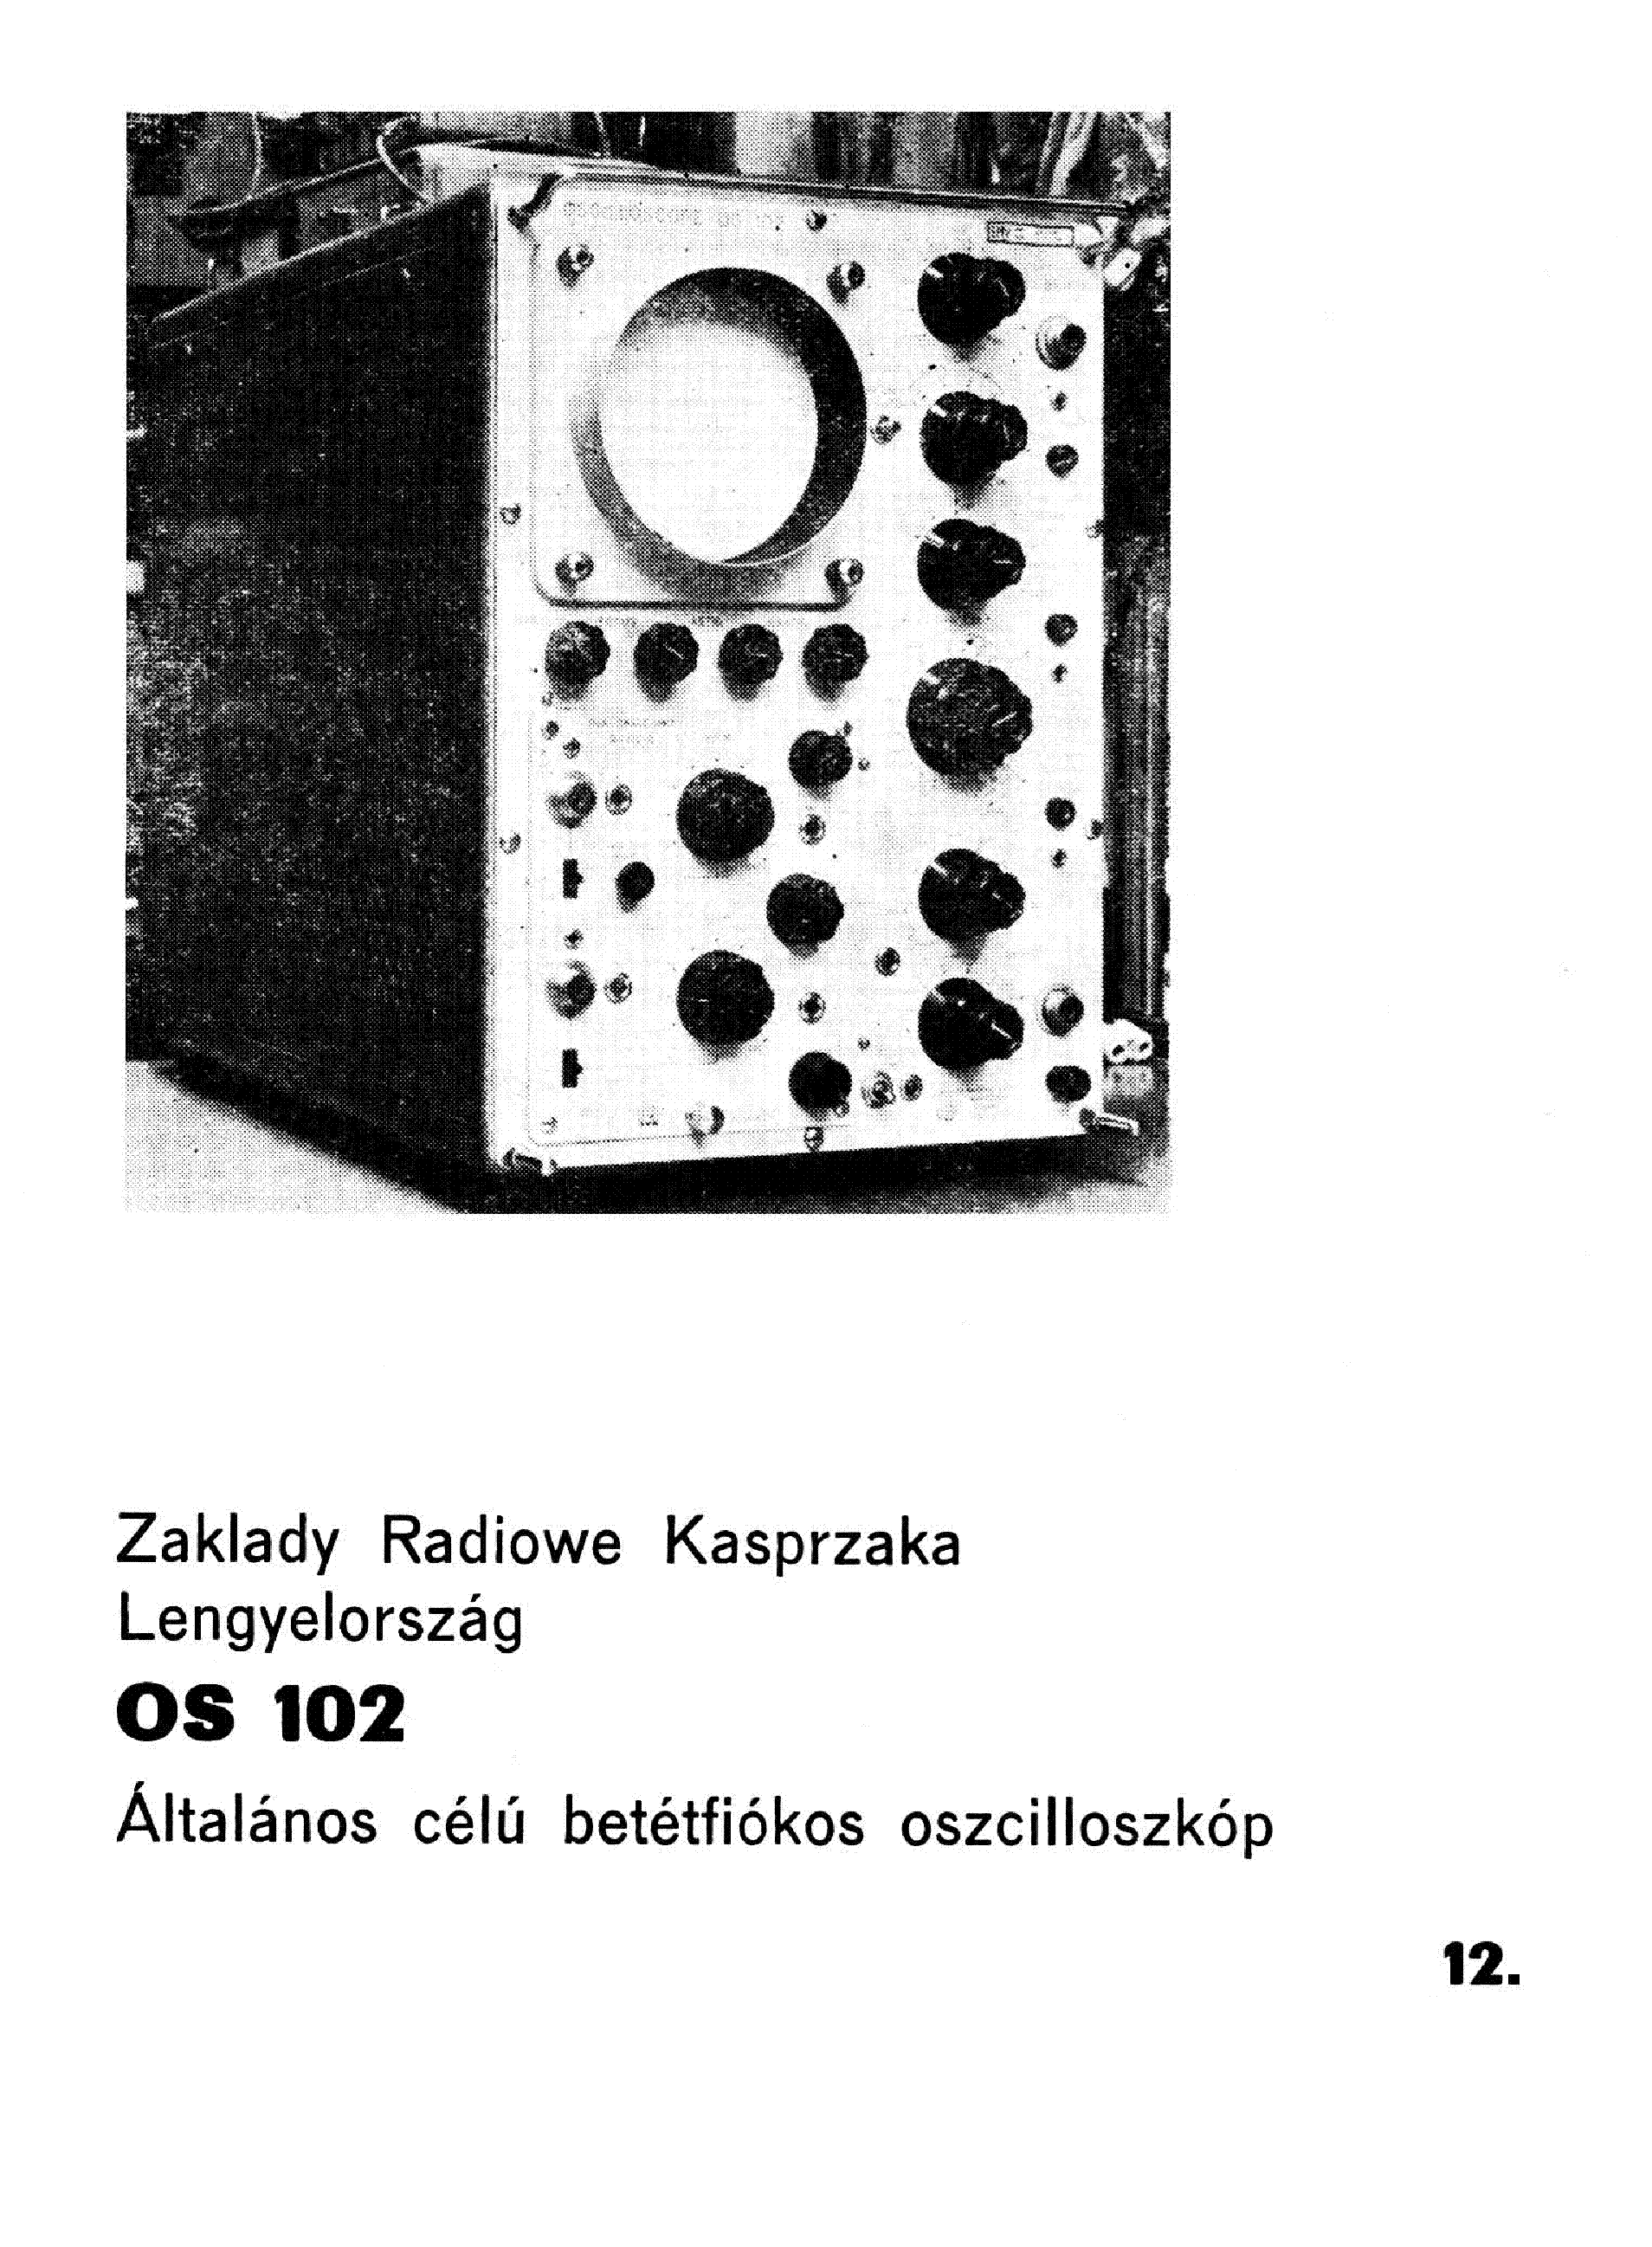 ZRK OS-102 OSZCILLOSZKOP service manual (1st page)